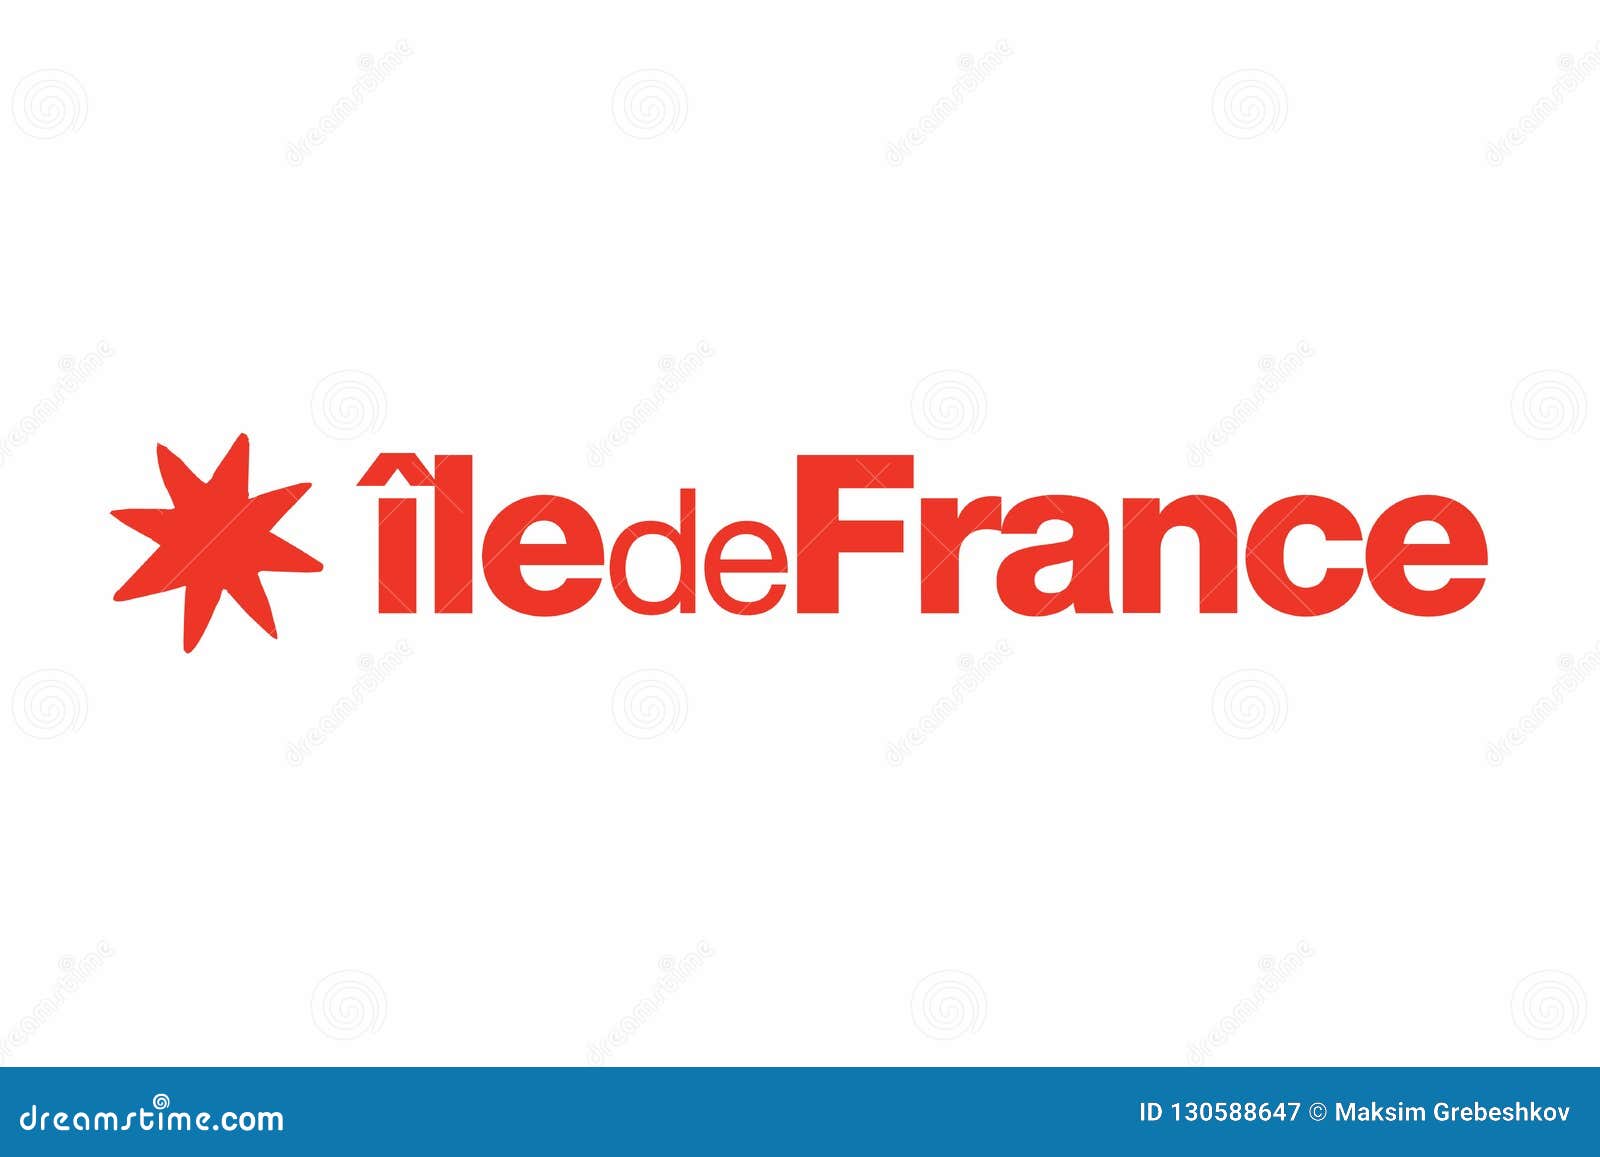 simple flag of ile de france